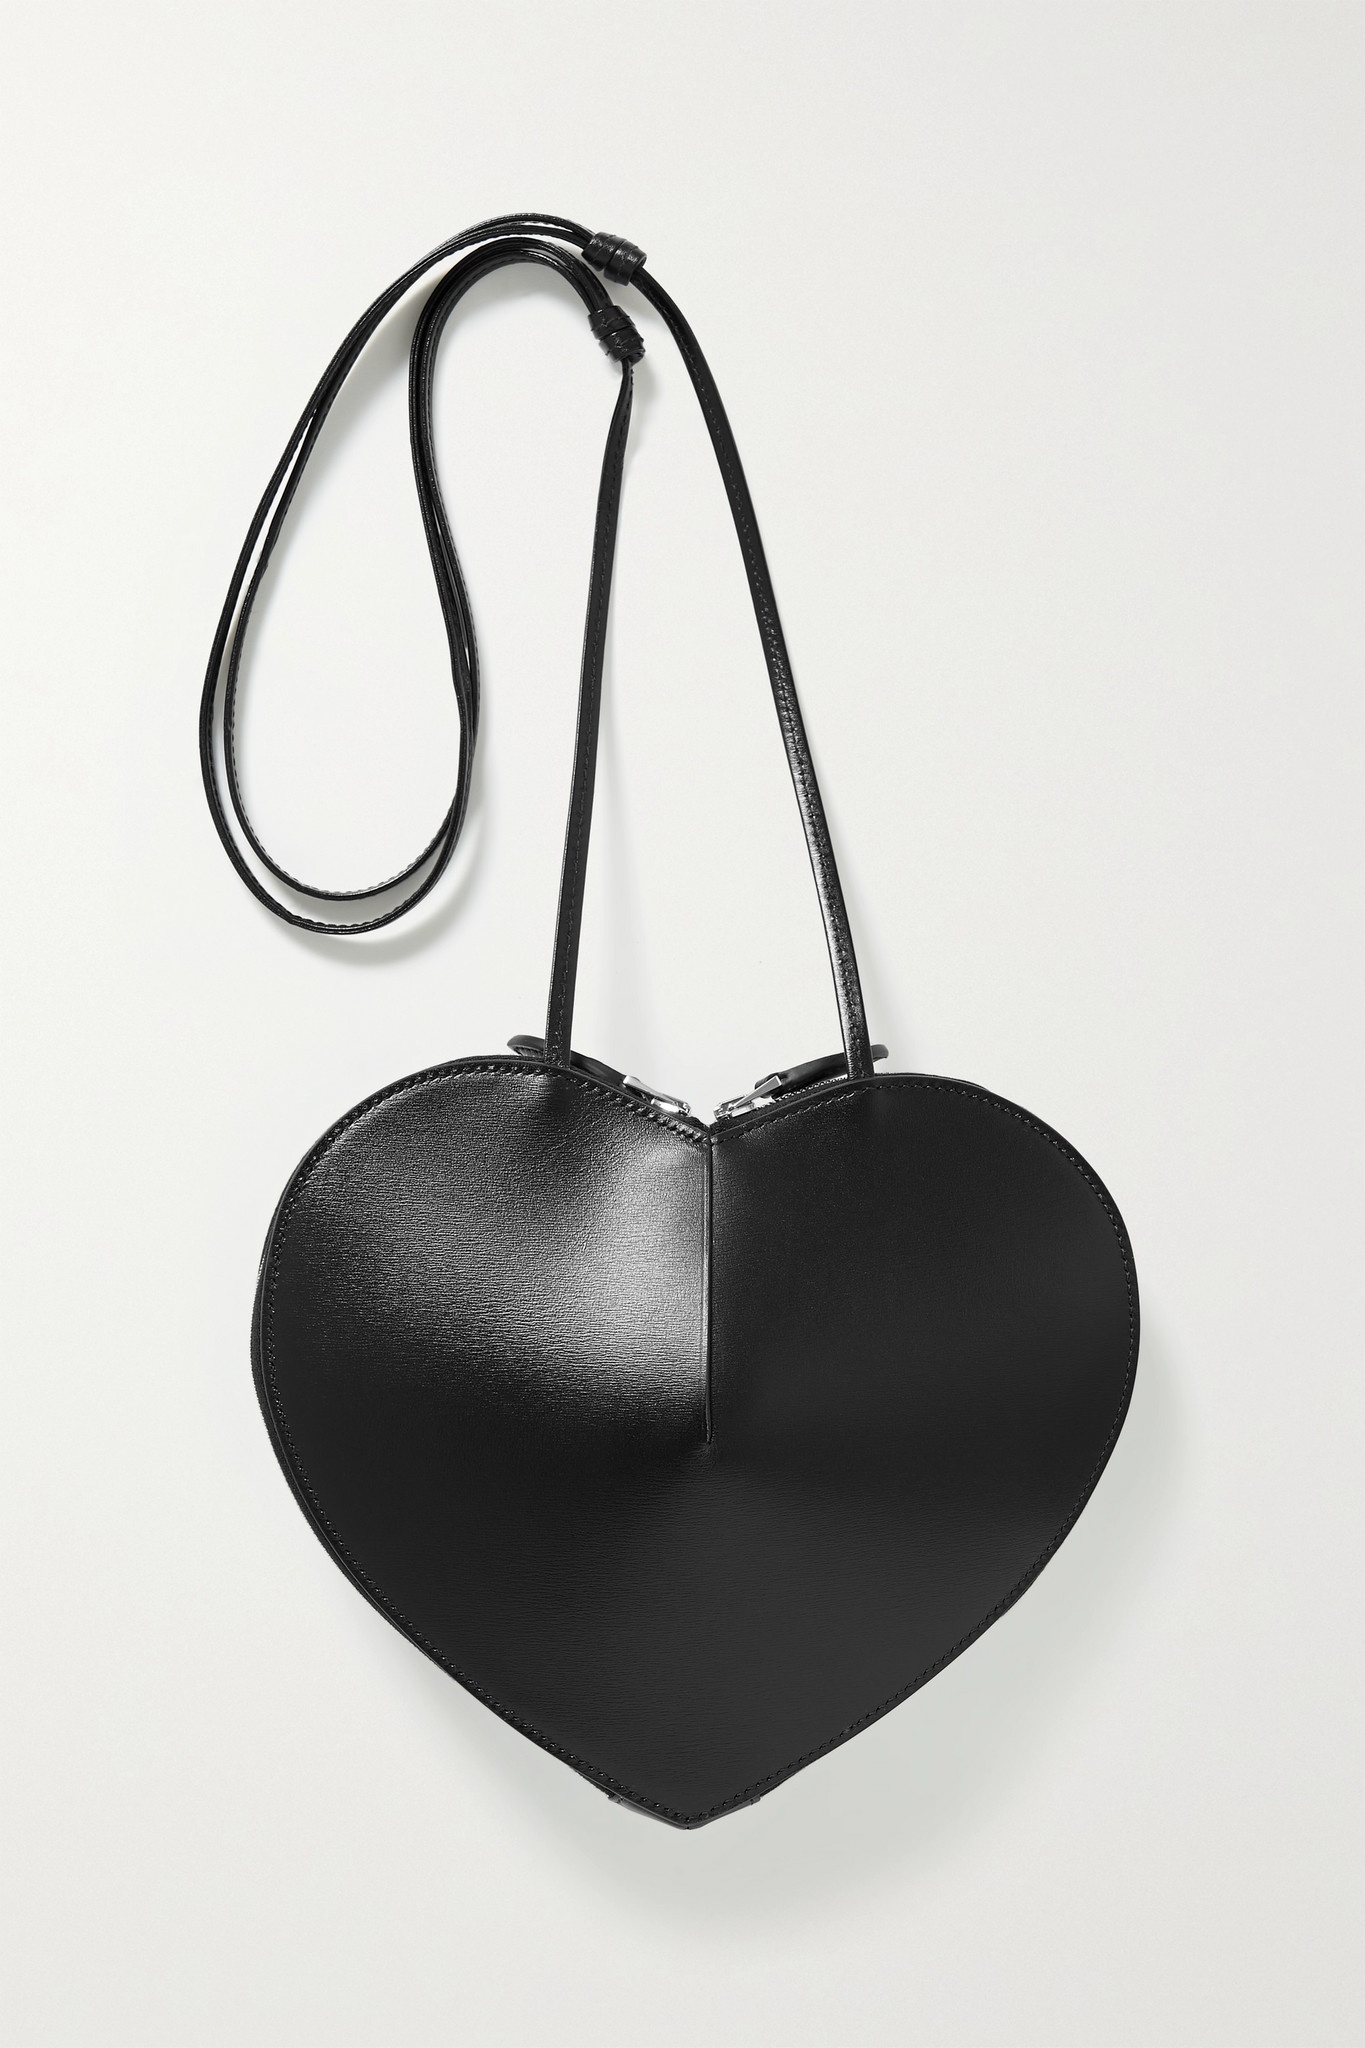 Alaïa Le Coeur heart-shaped leather shoulder bag